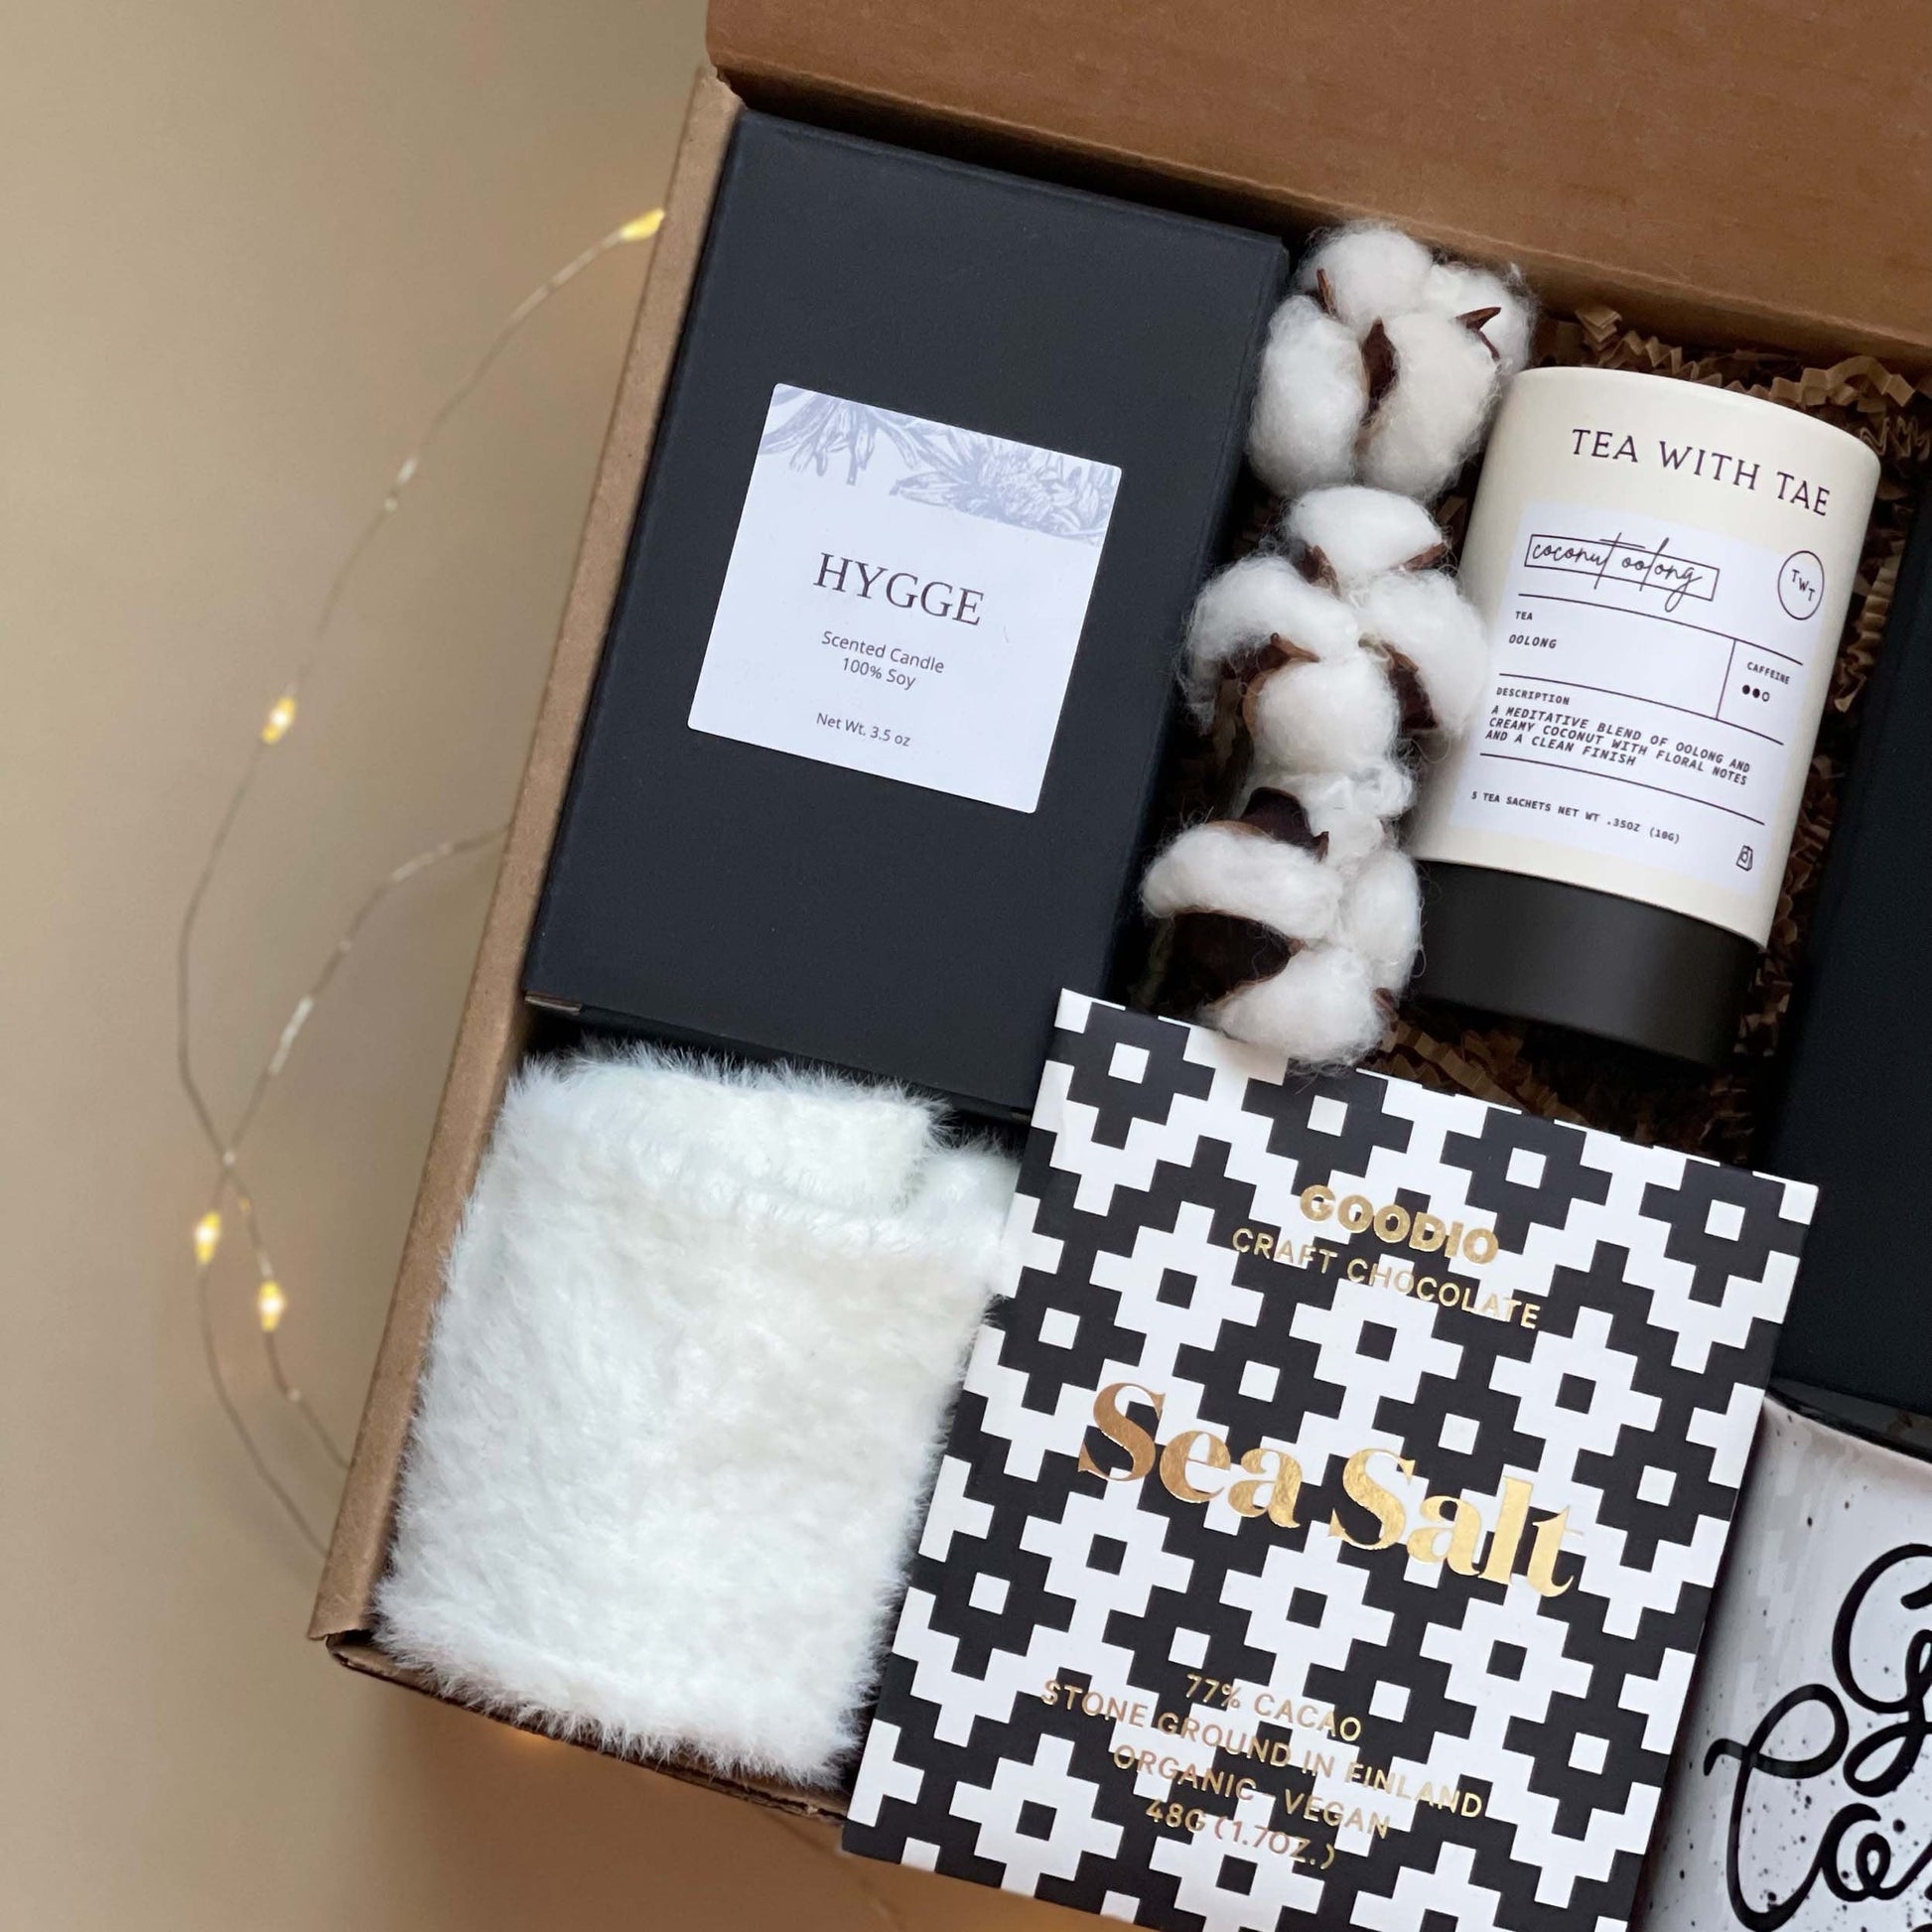 Boho Holiday Gift Basket, Hygge Warm Gift Box, Winter Gift